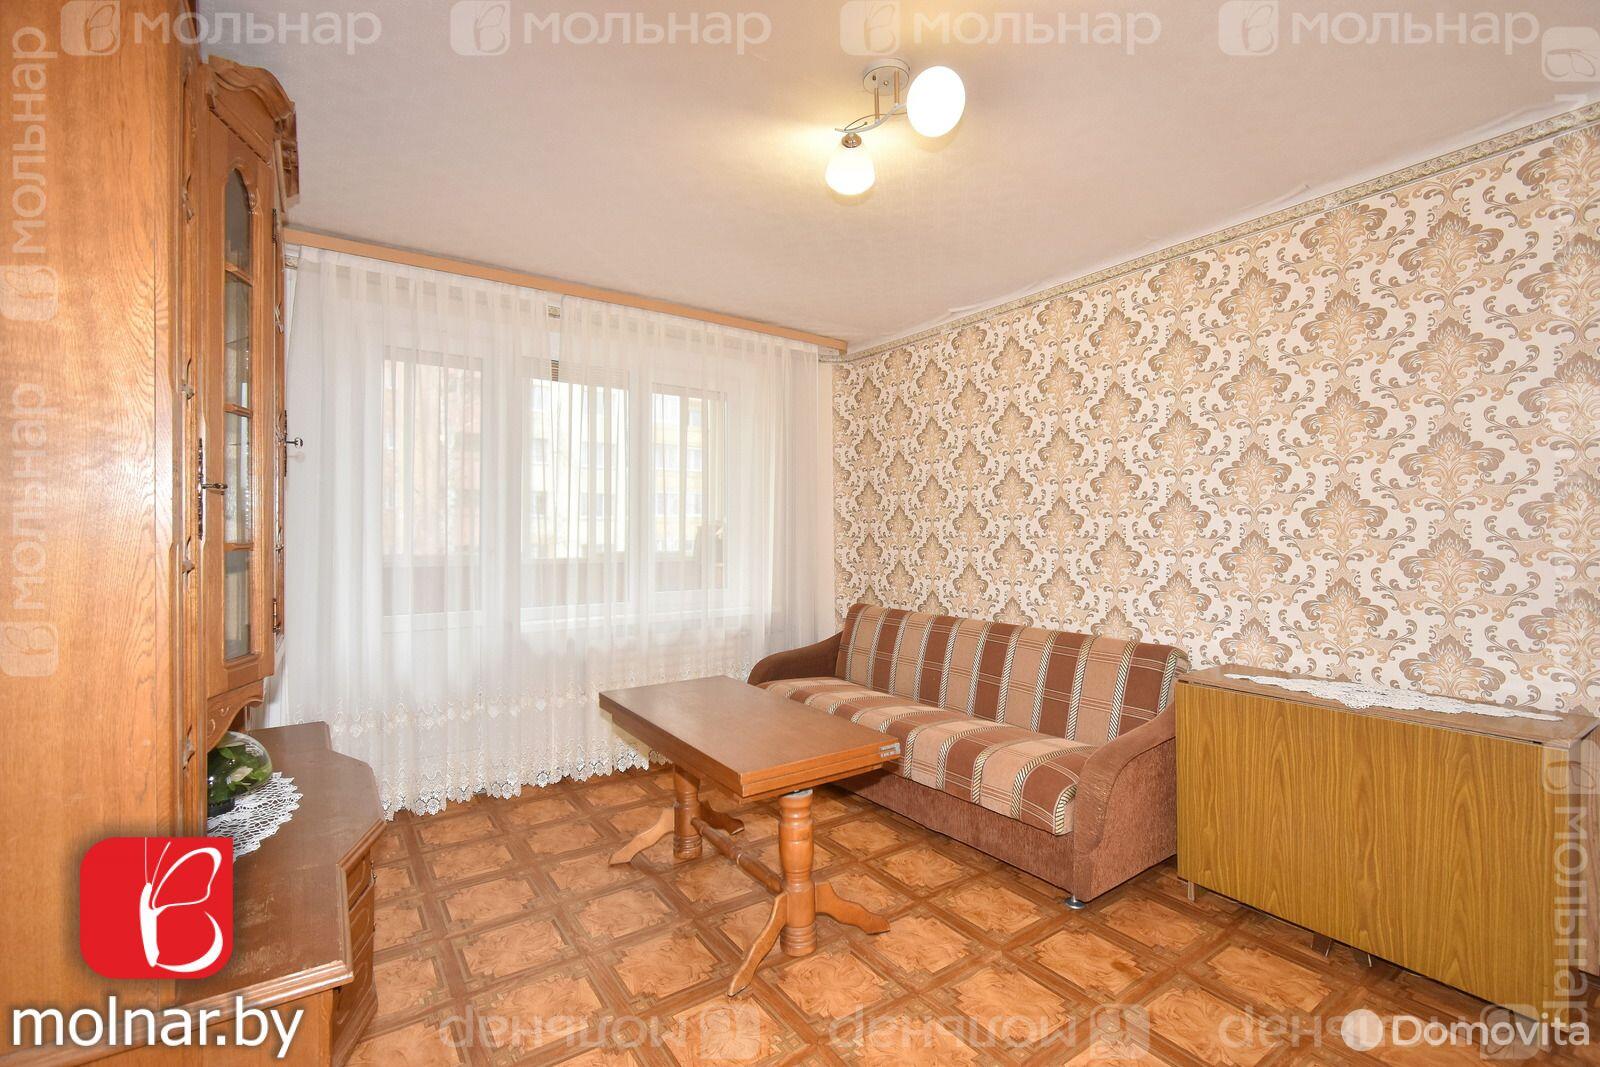 квартира, Минск, ул. Одинцова, д. 53, стоимость продажи 232 575 р.